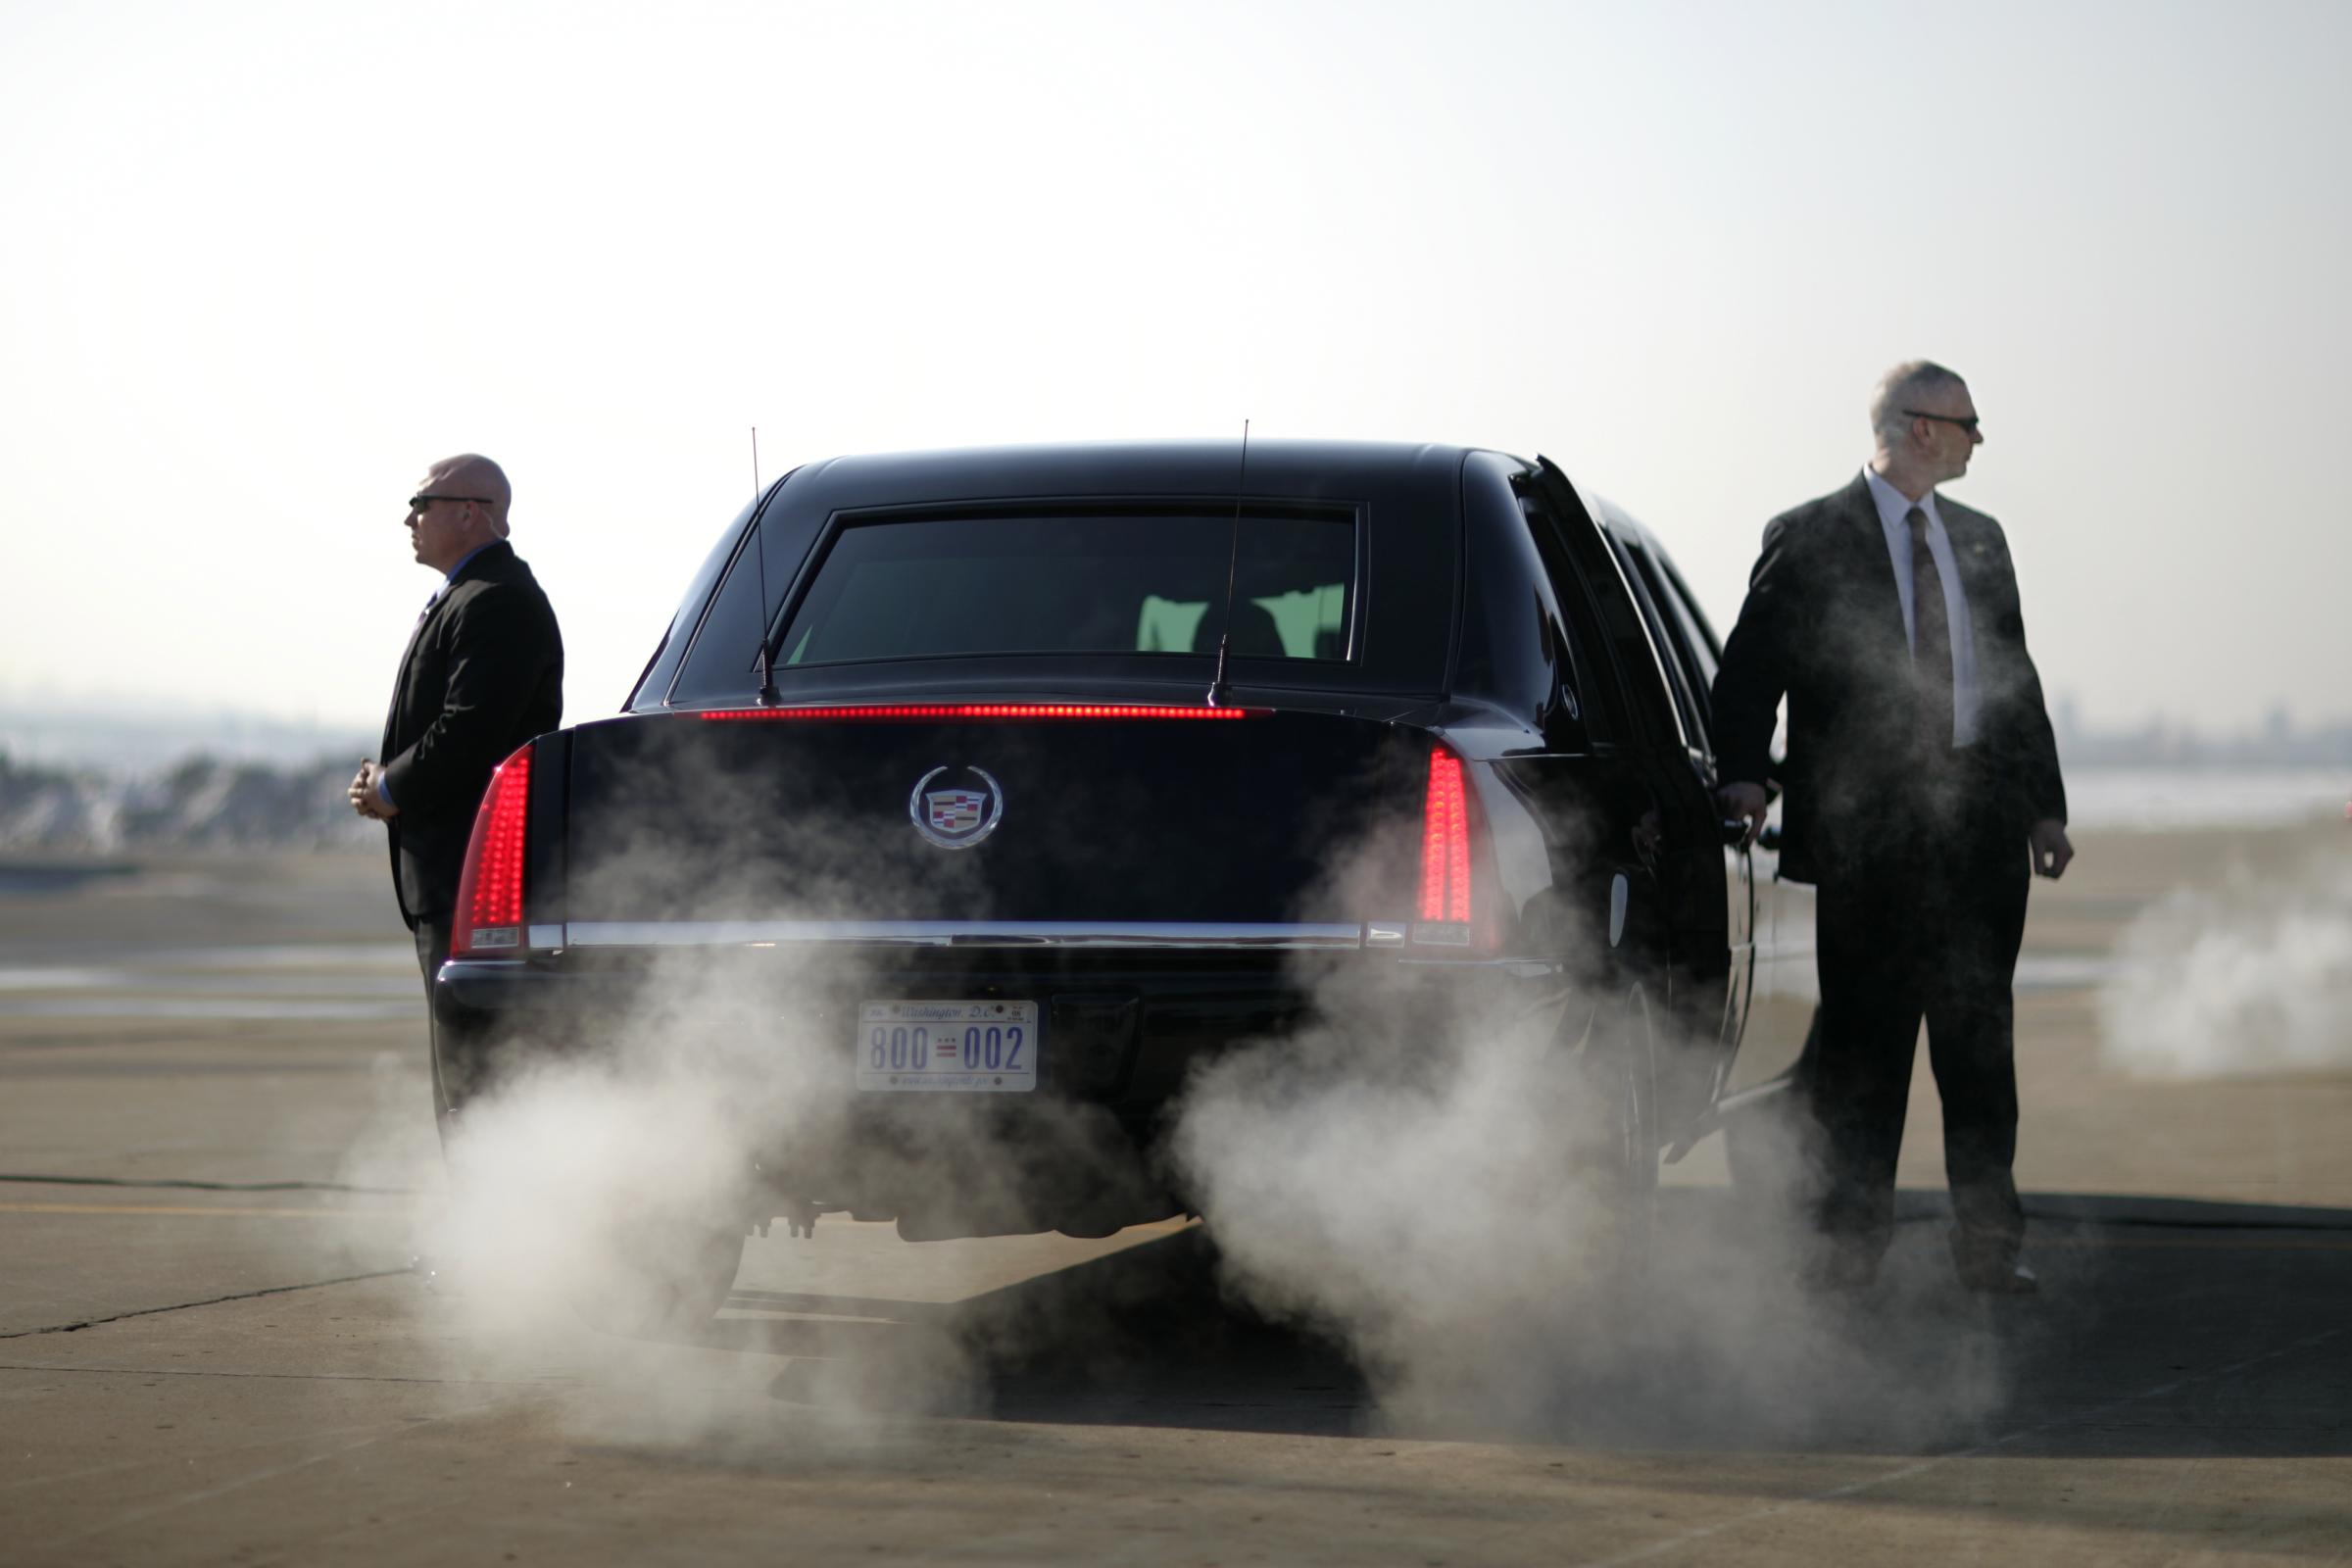 USA - Politics - Secret Service Agents Watch the President's Limousine